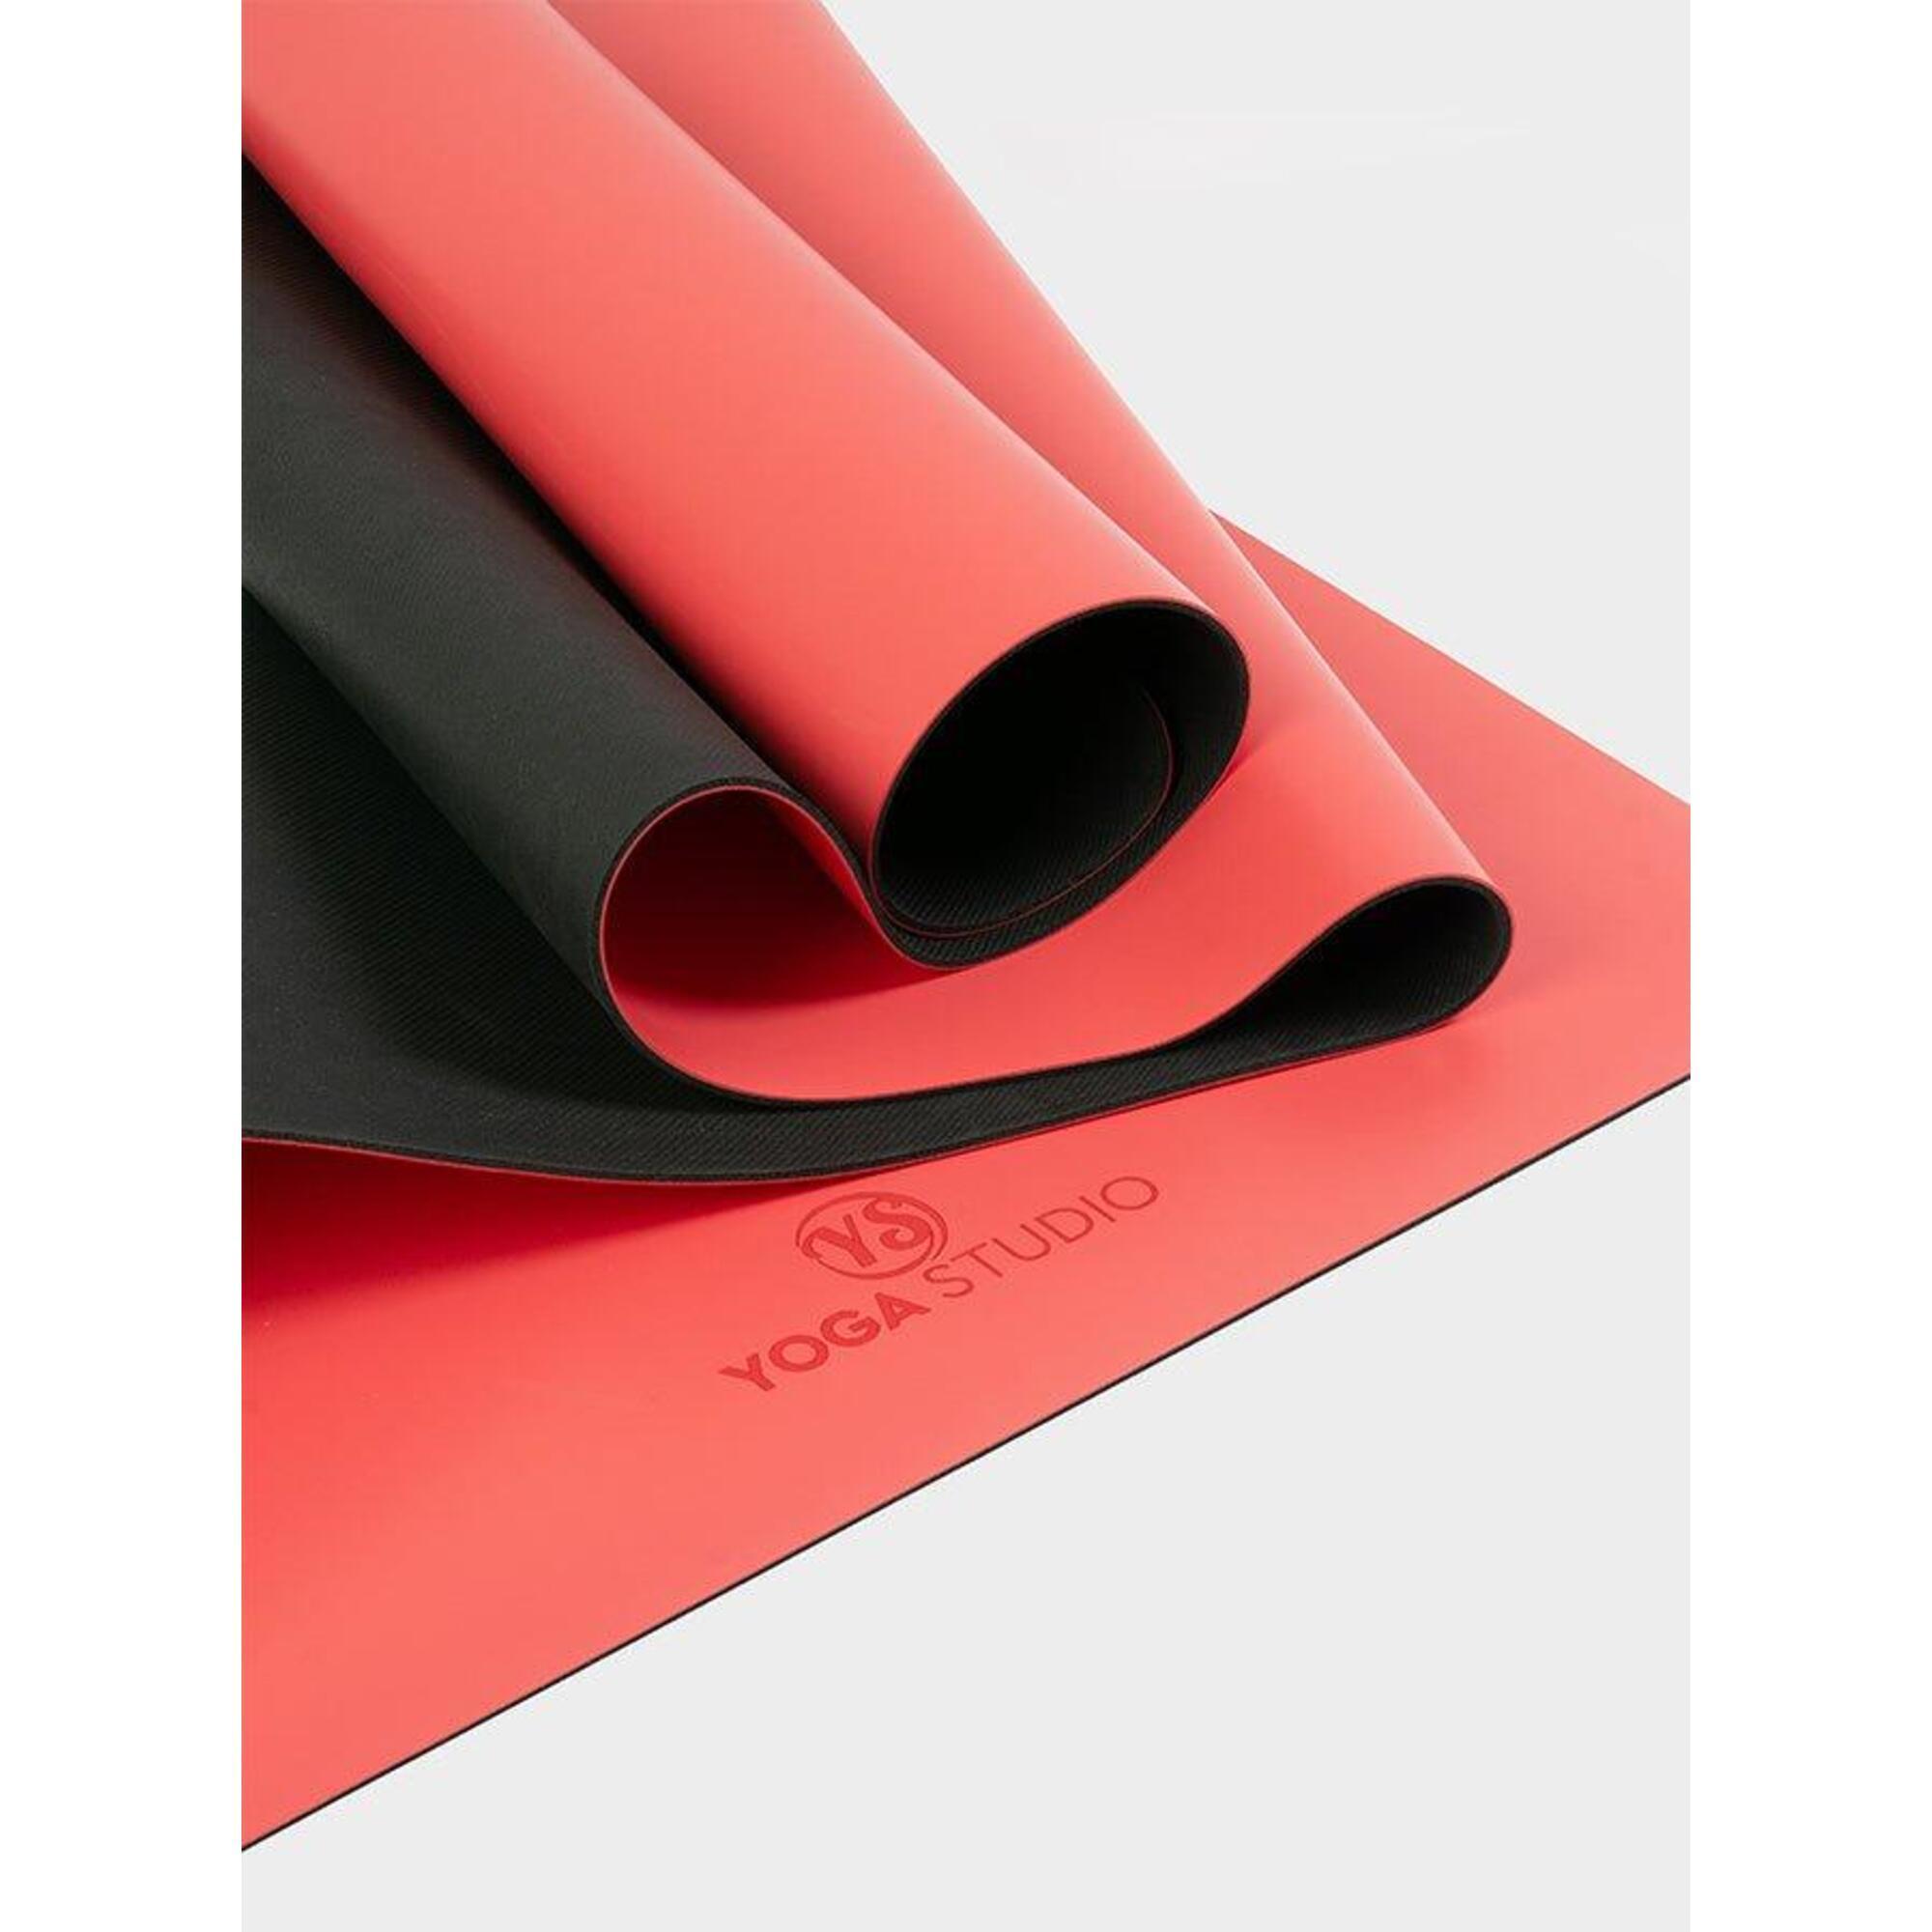 Yoga Studio The Grip Yoga Mat 4mm - Red 1/3